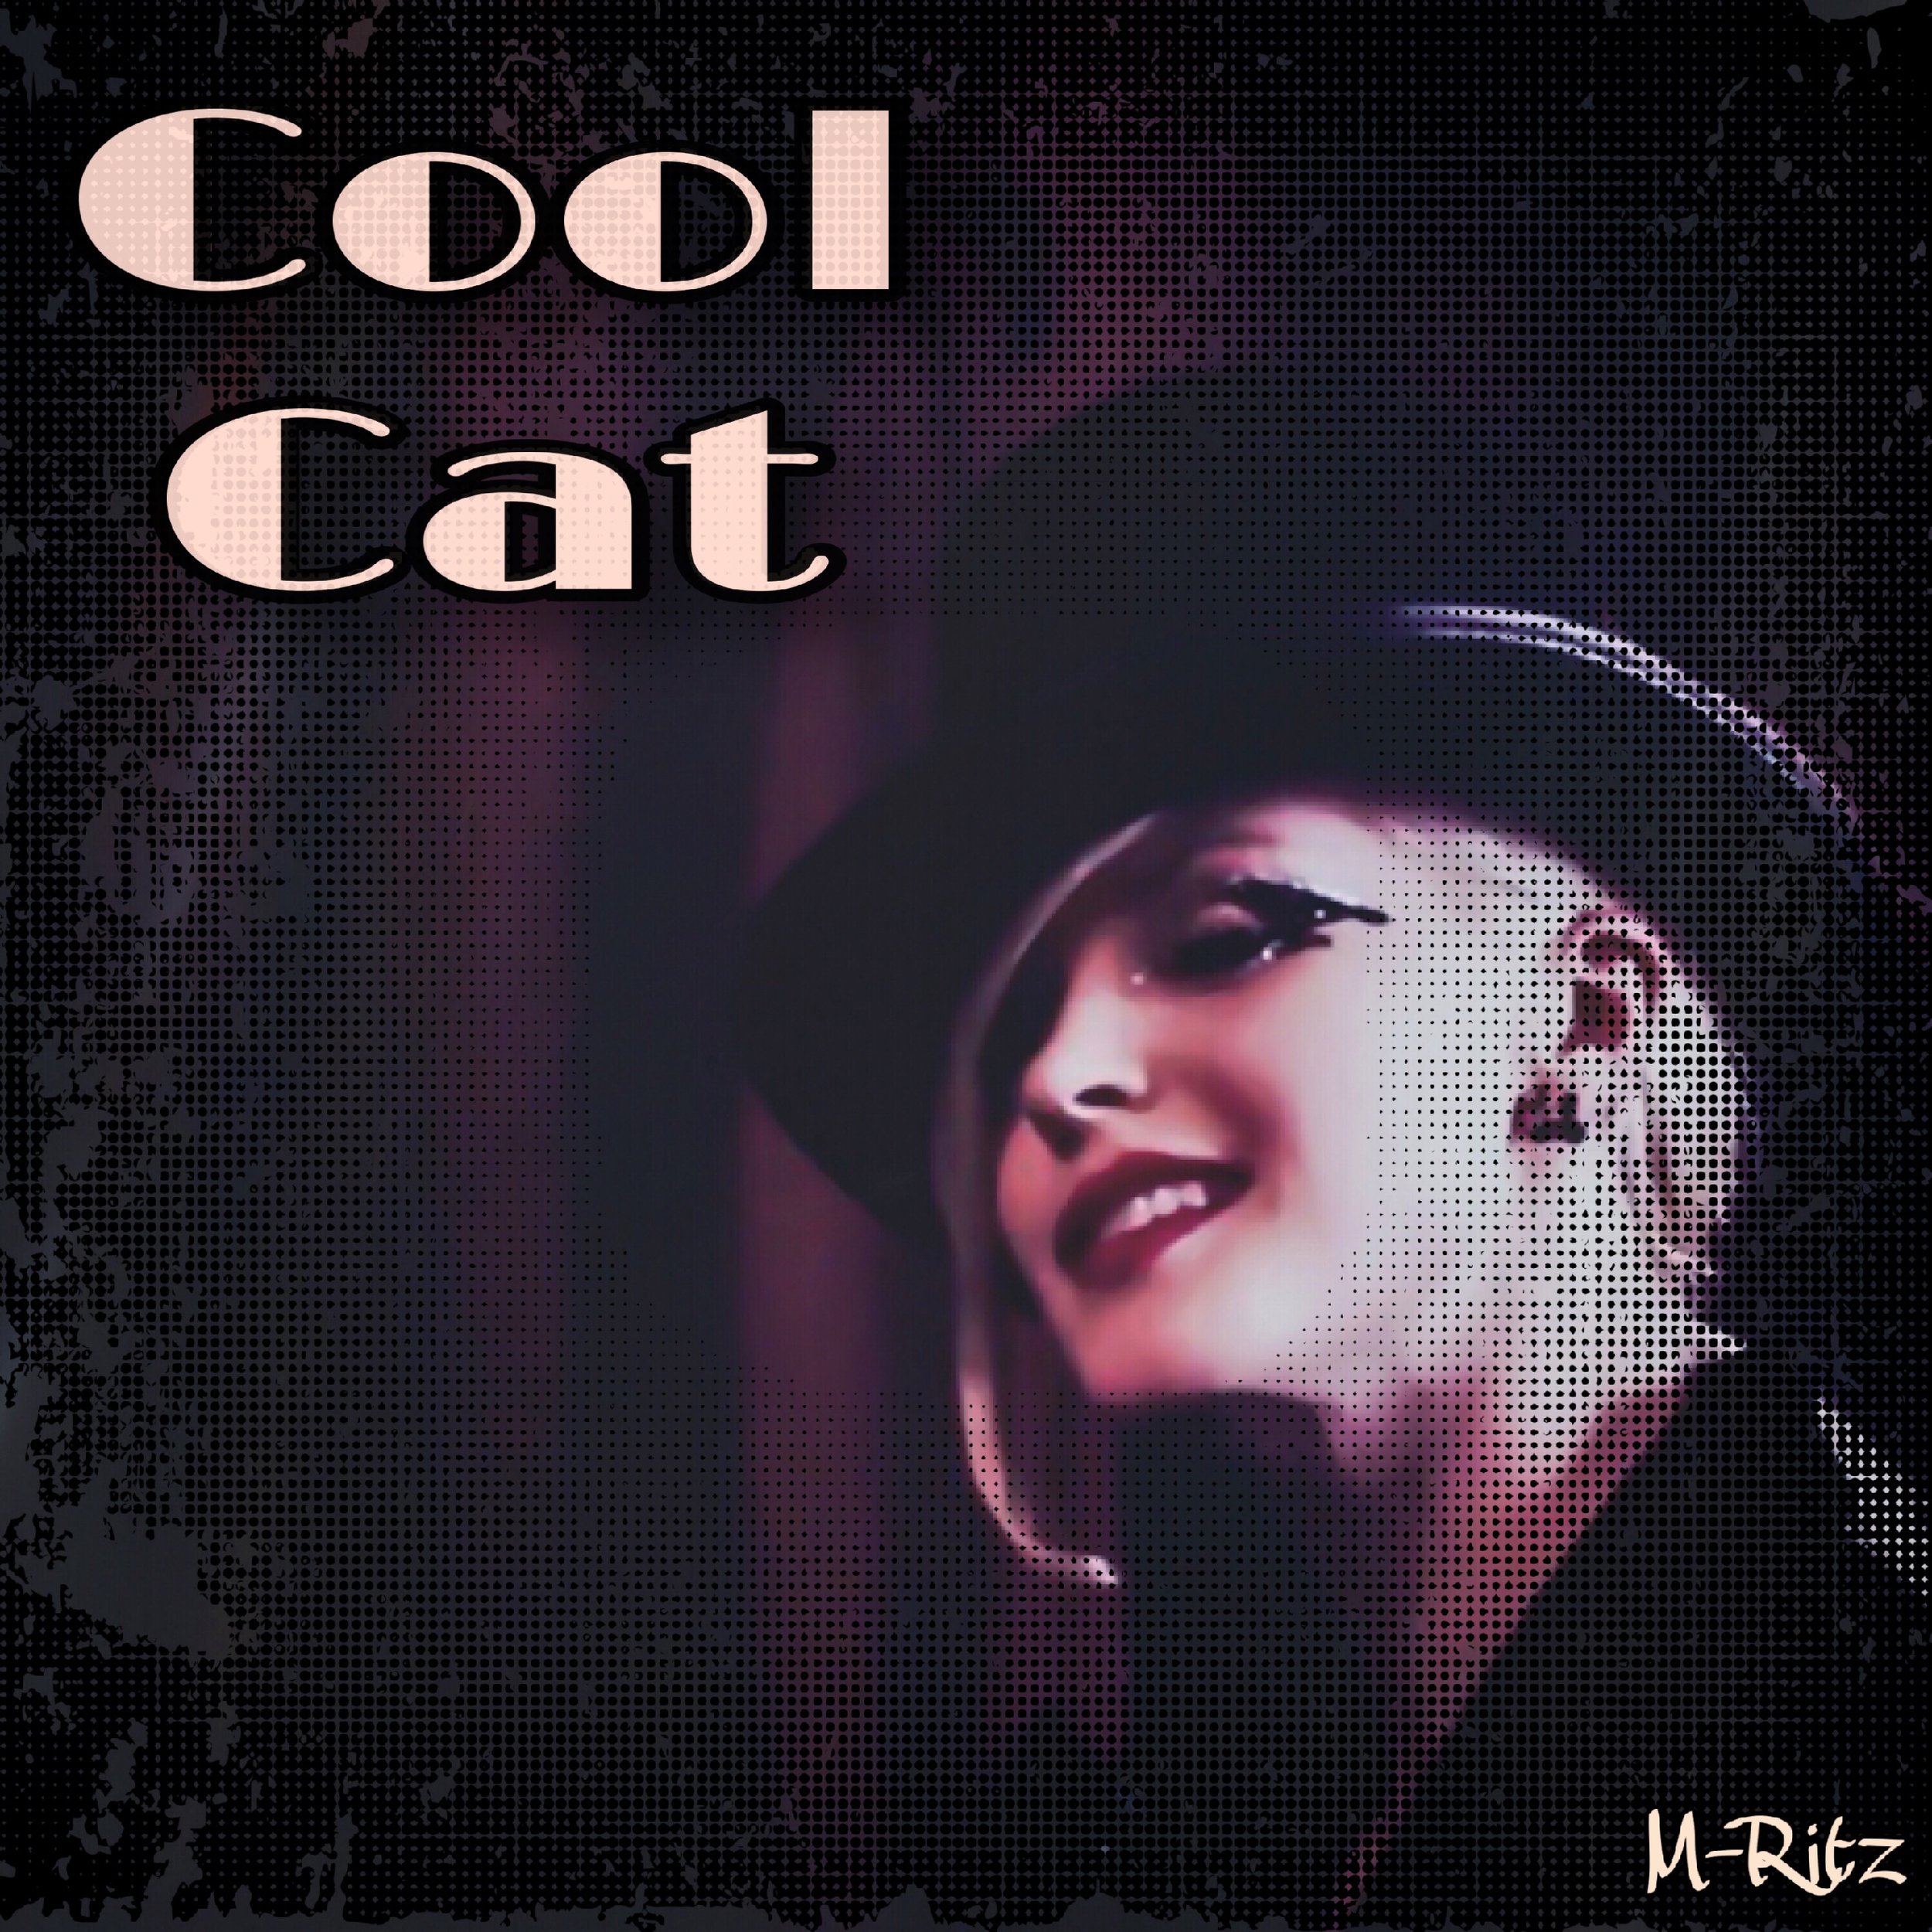 Cool Cat - Song Artwork.jpg